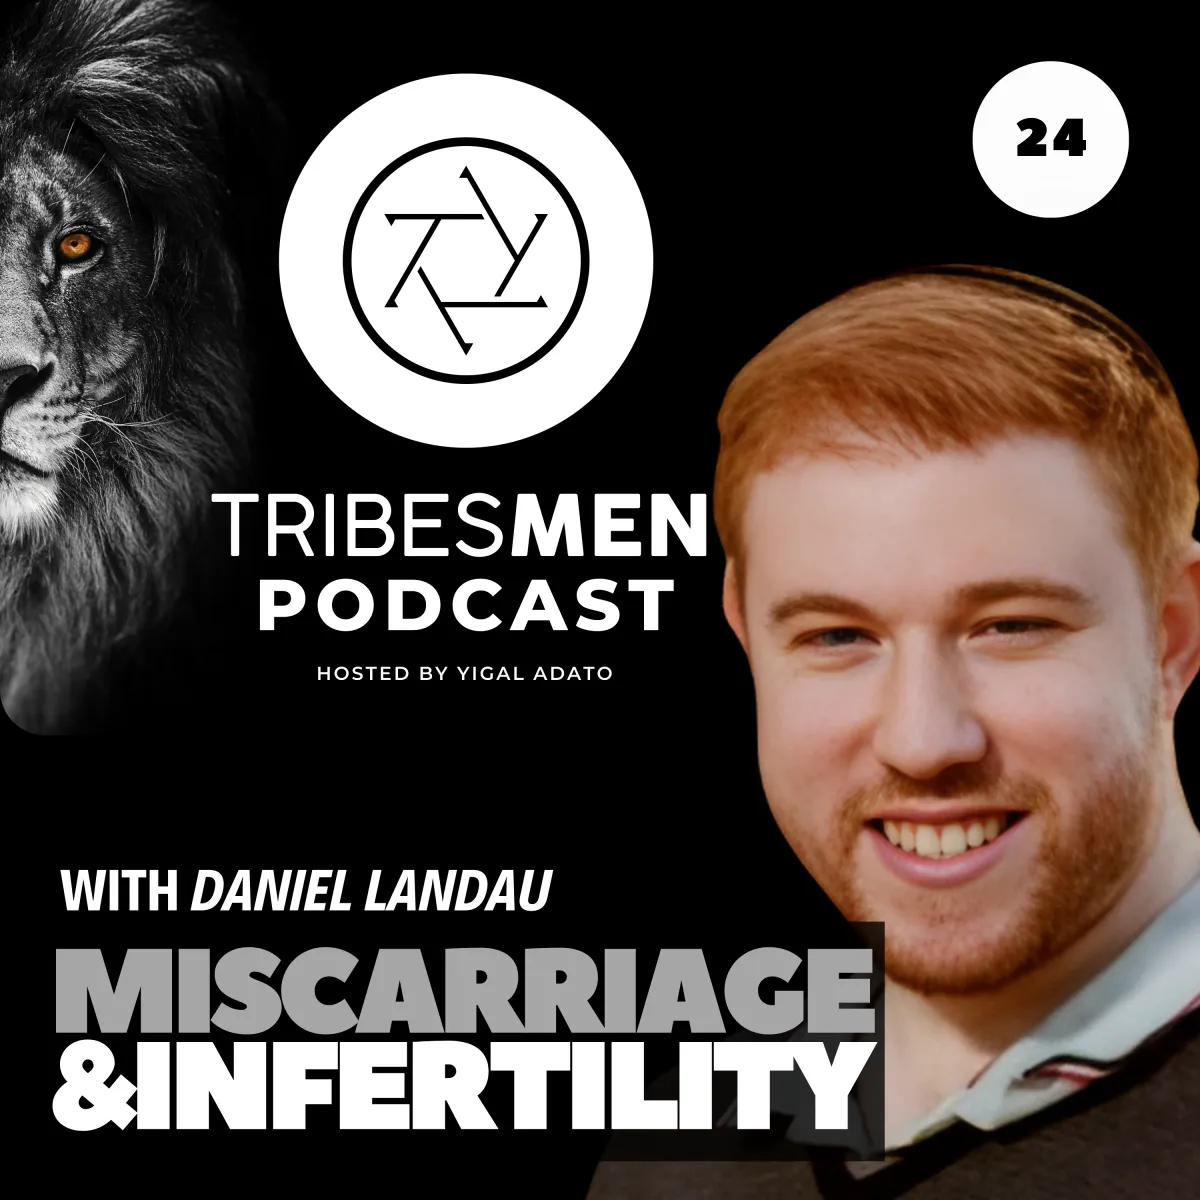 Tribesmen Podcast Episode 24 with Daniel Landau